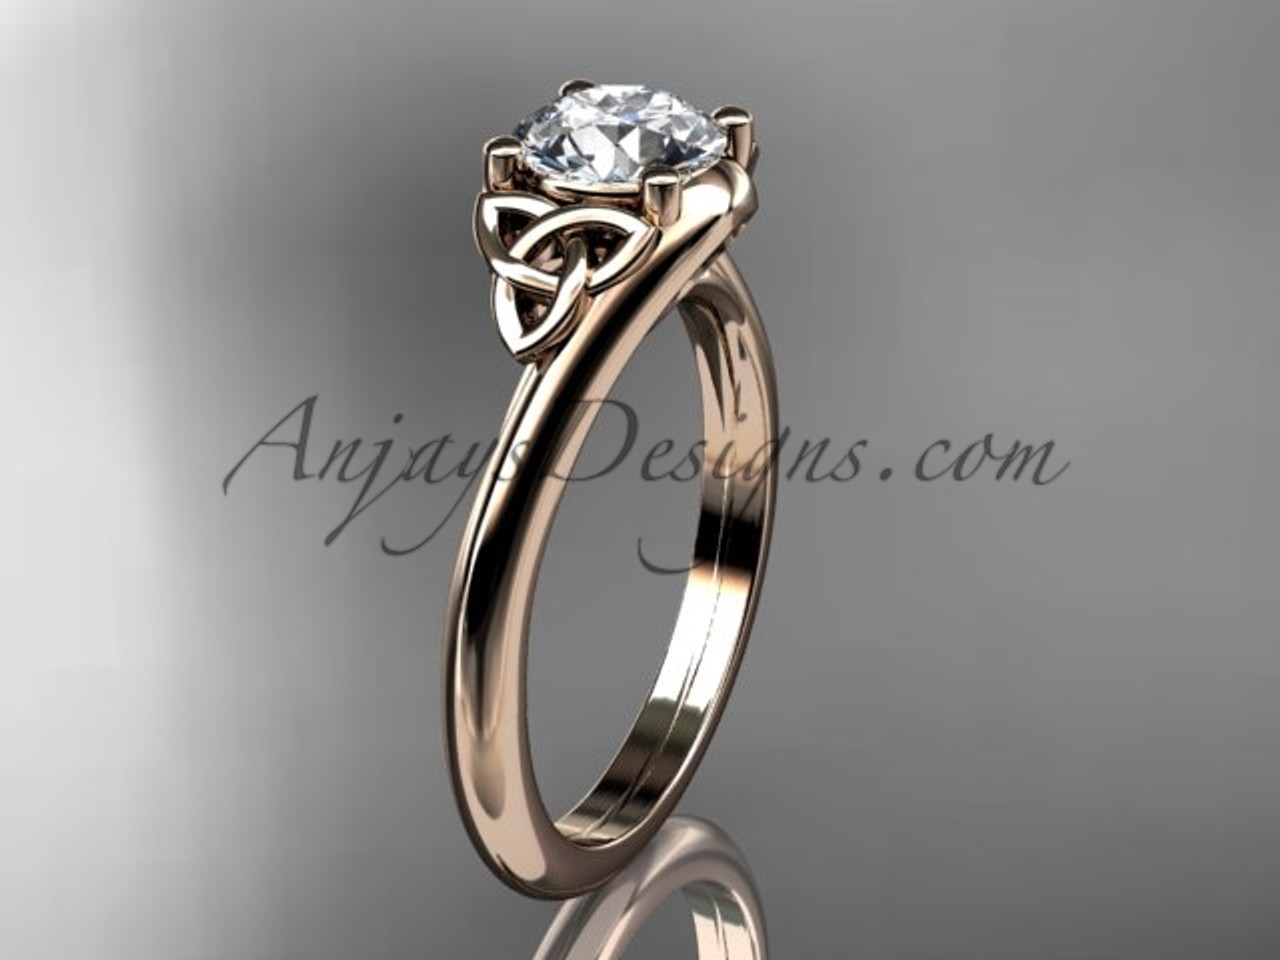 20 Stunning Wedding Engagement Rings That Will Blow You Away -  Elegantweddinginvites.com Blog